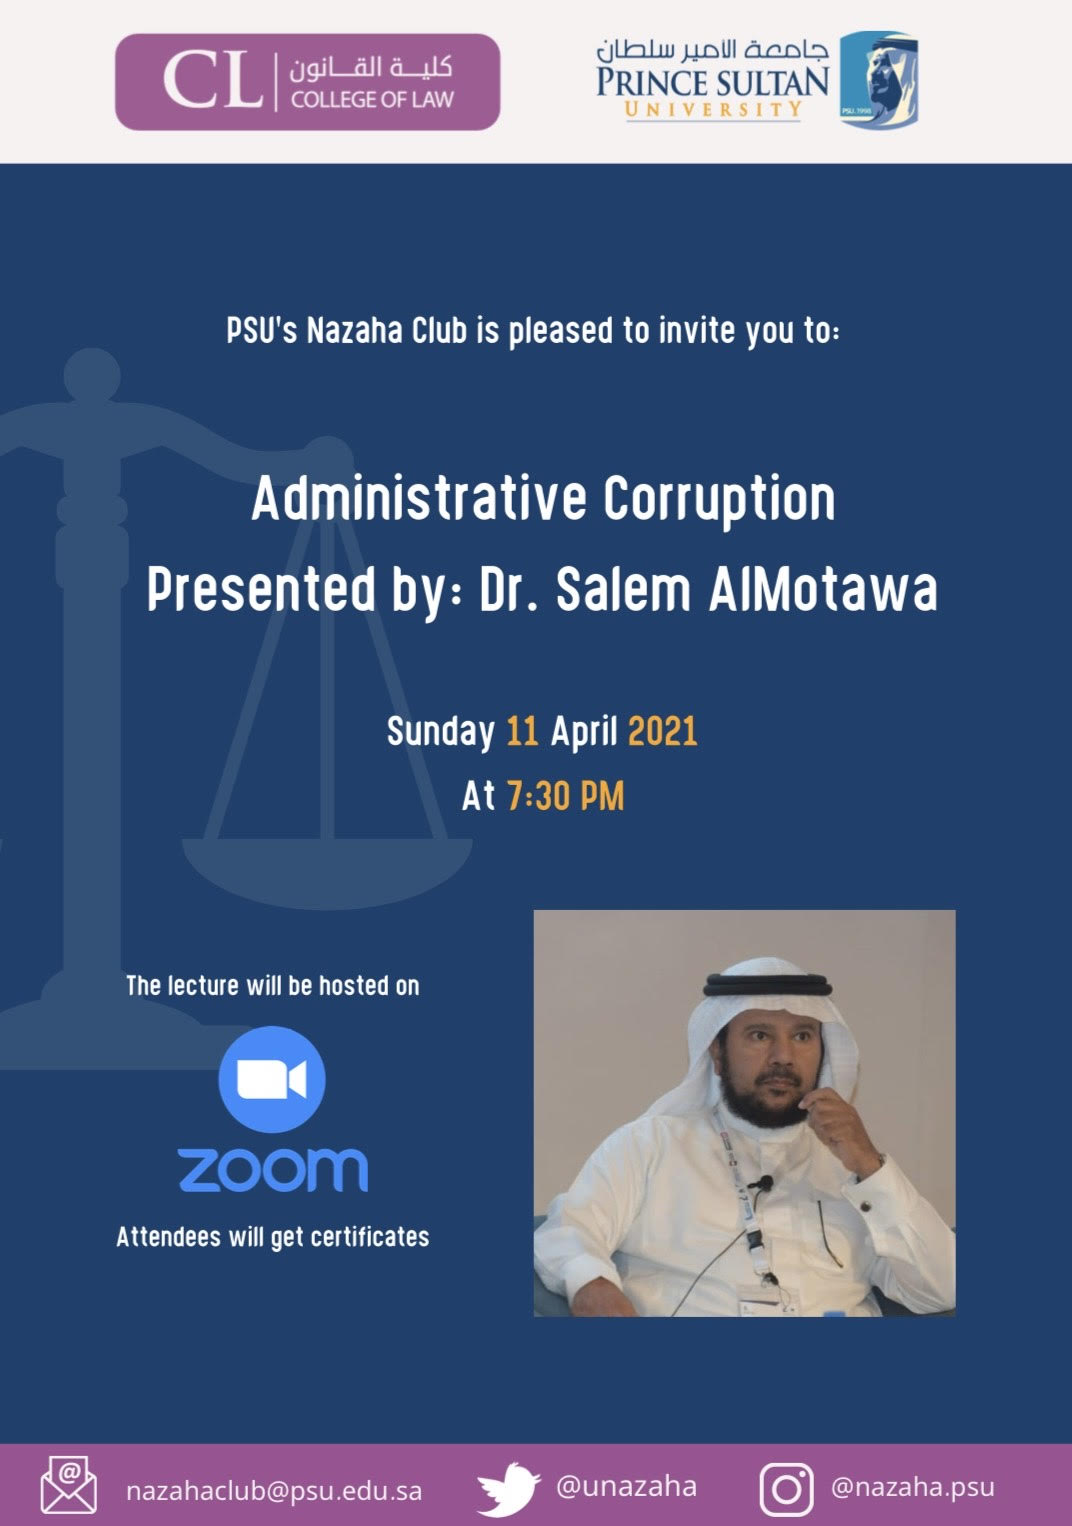 Administrative Corruption presented by: Dr.Salem Almotawa